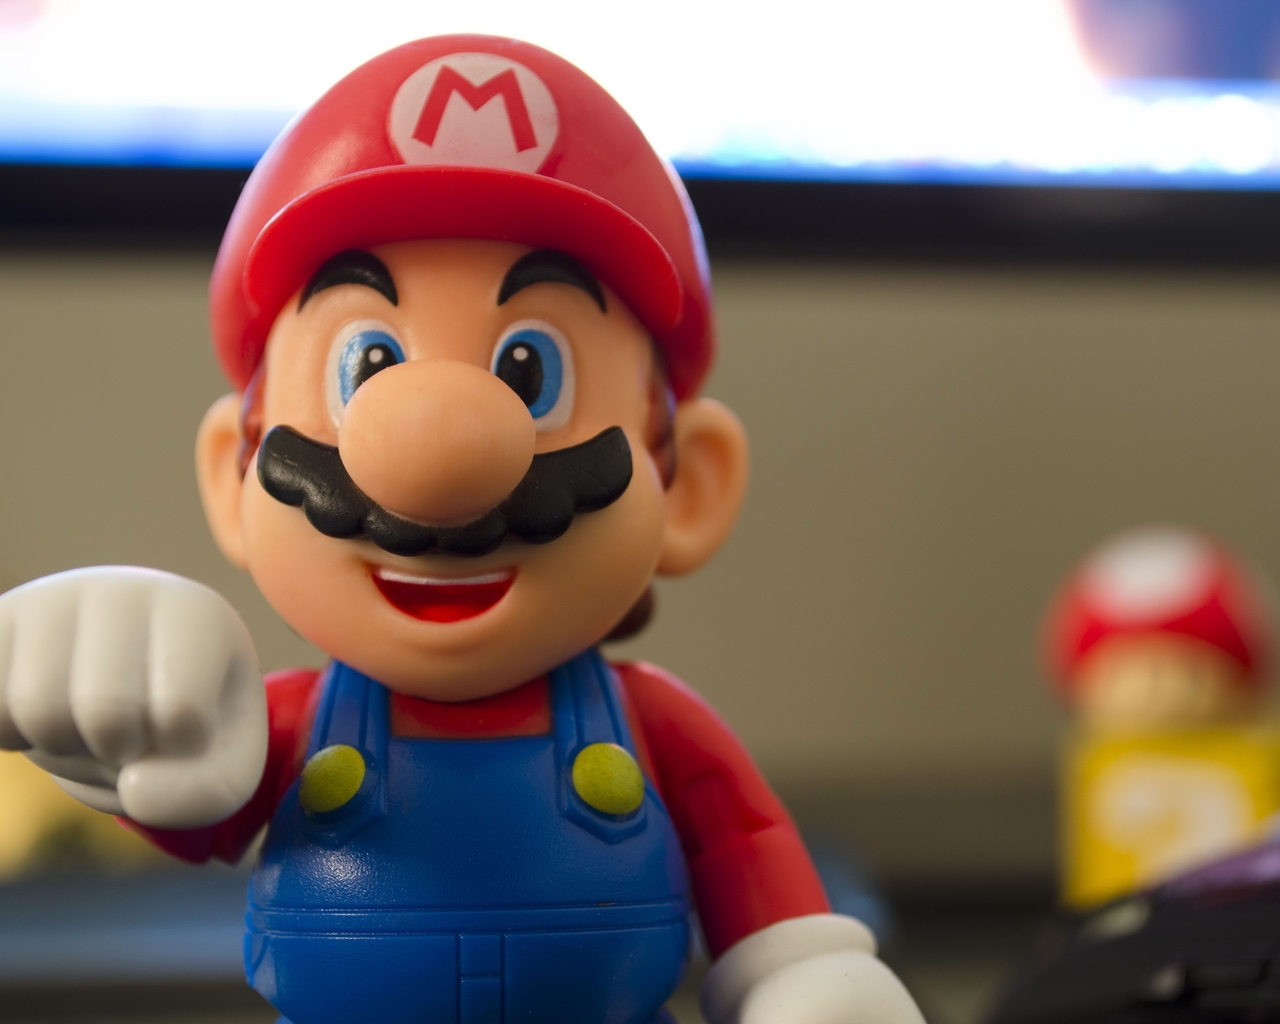 Super Mario Figurine for 1280 x 1024 resolution